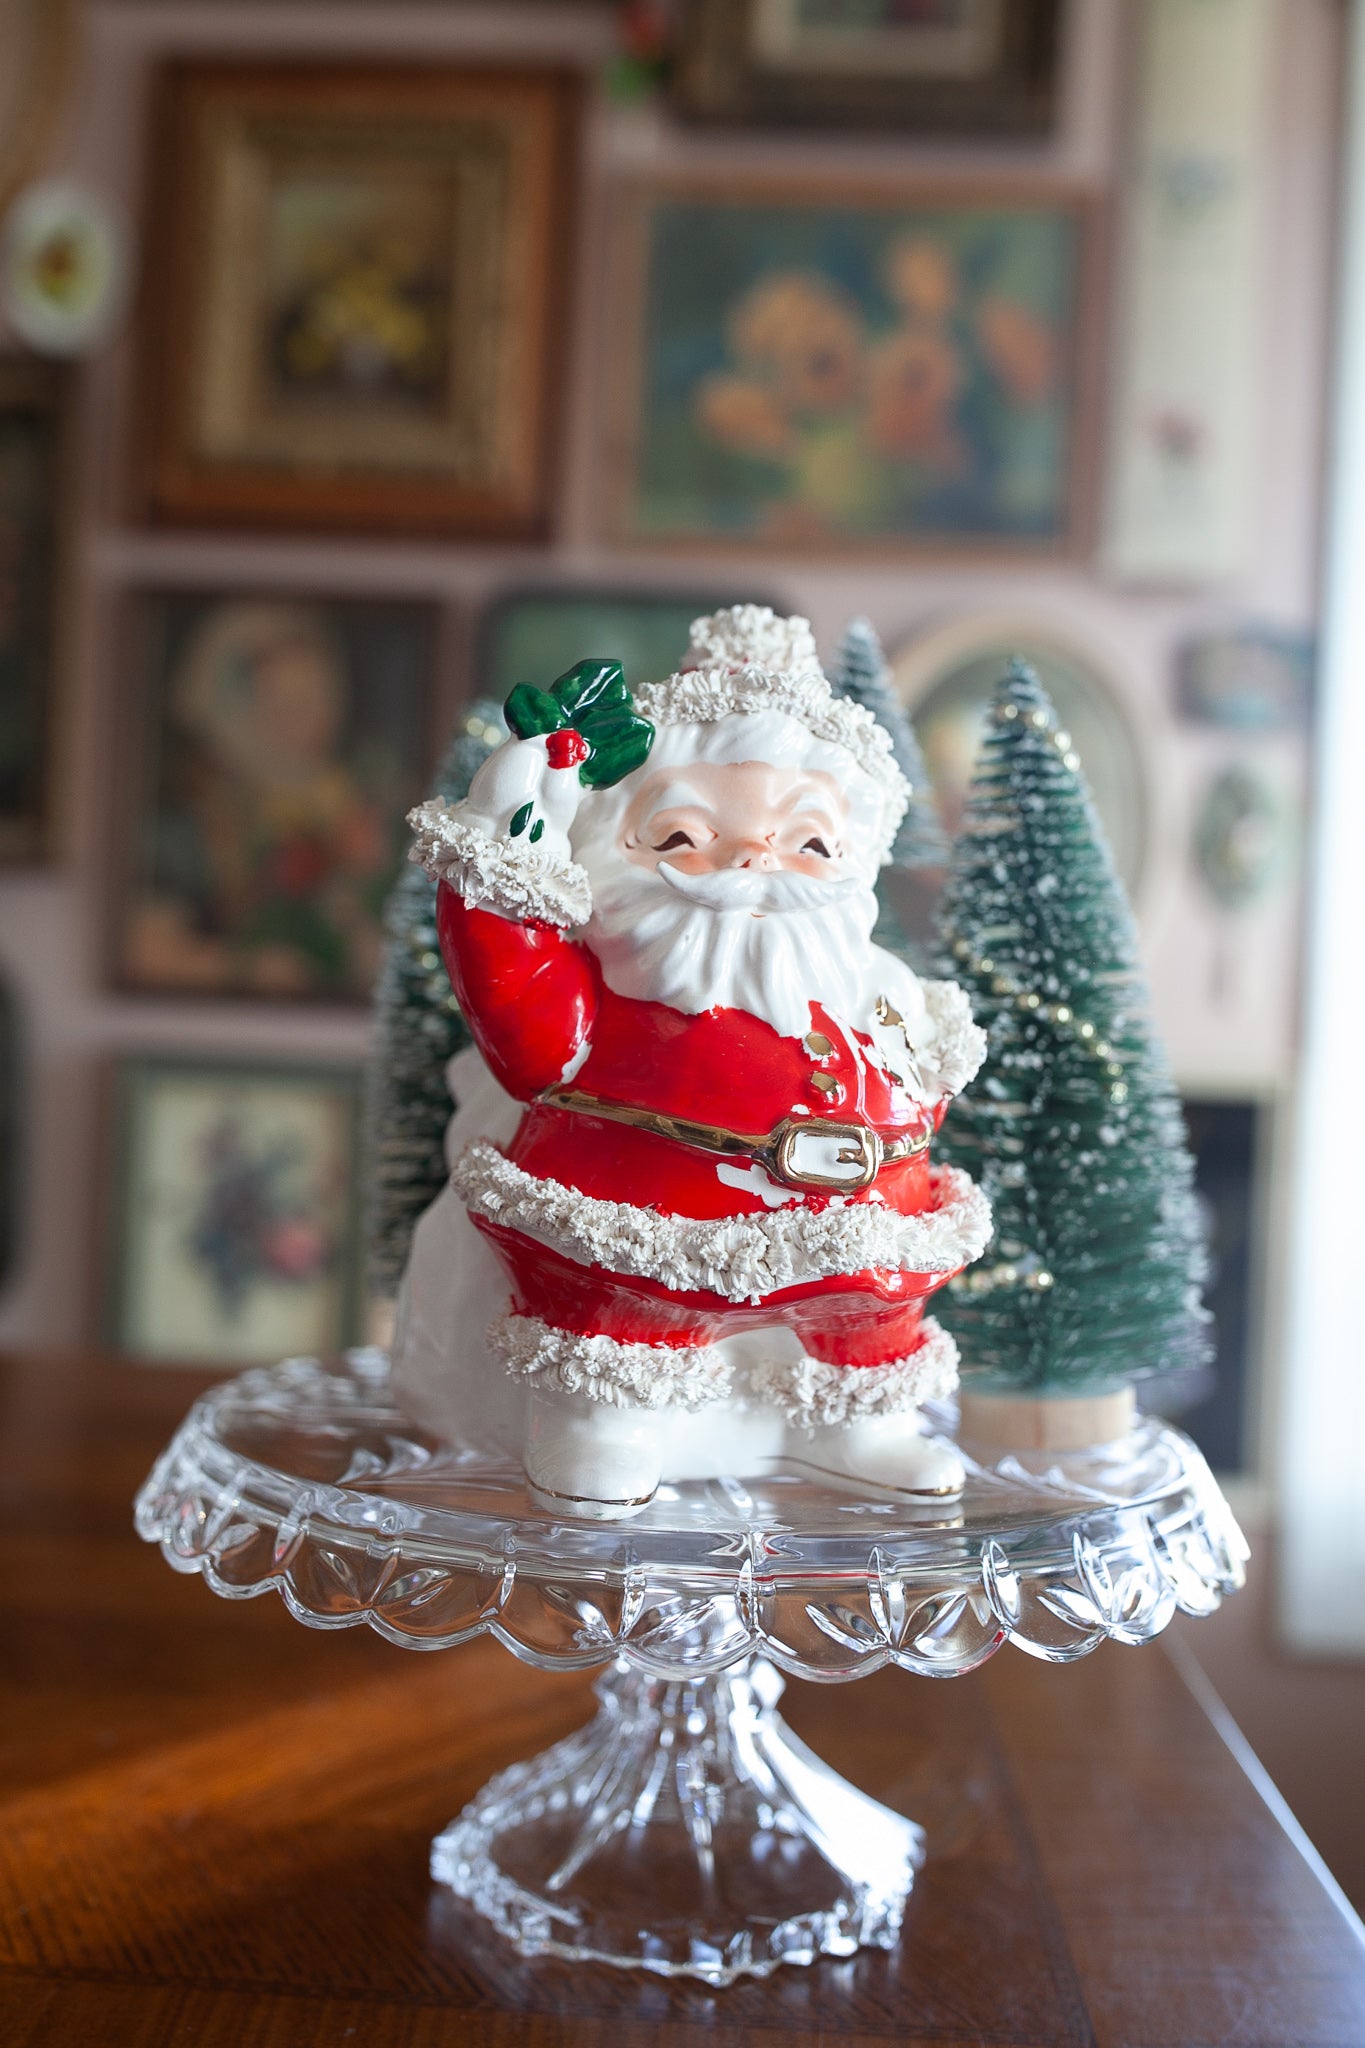 Napco Ilx266 Large Santa Claus Christmas Planter W-Bag-Holly- Spaghetti Trim - Vintage Santa